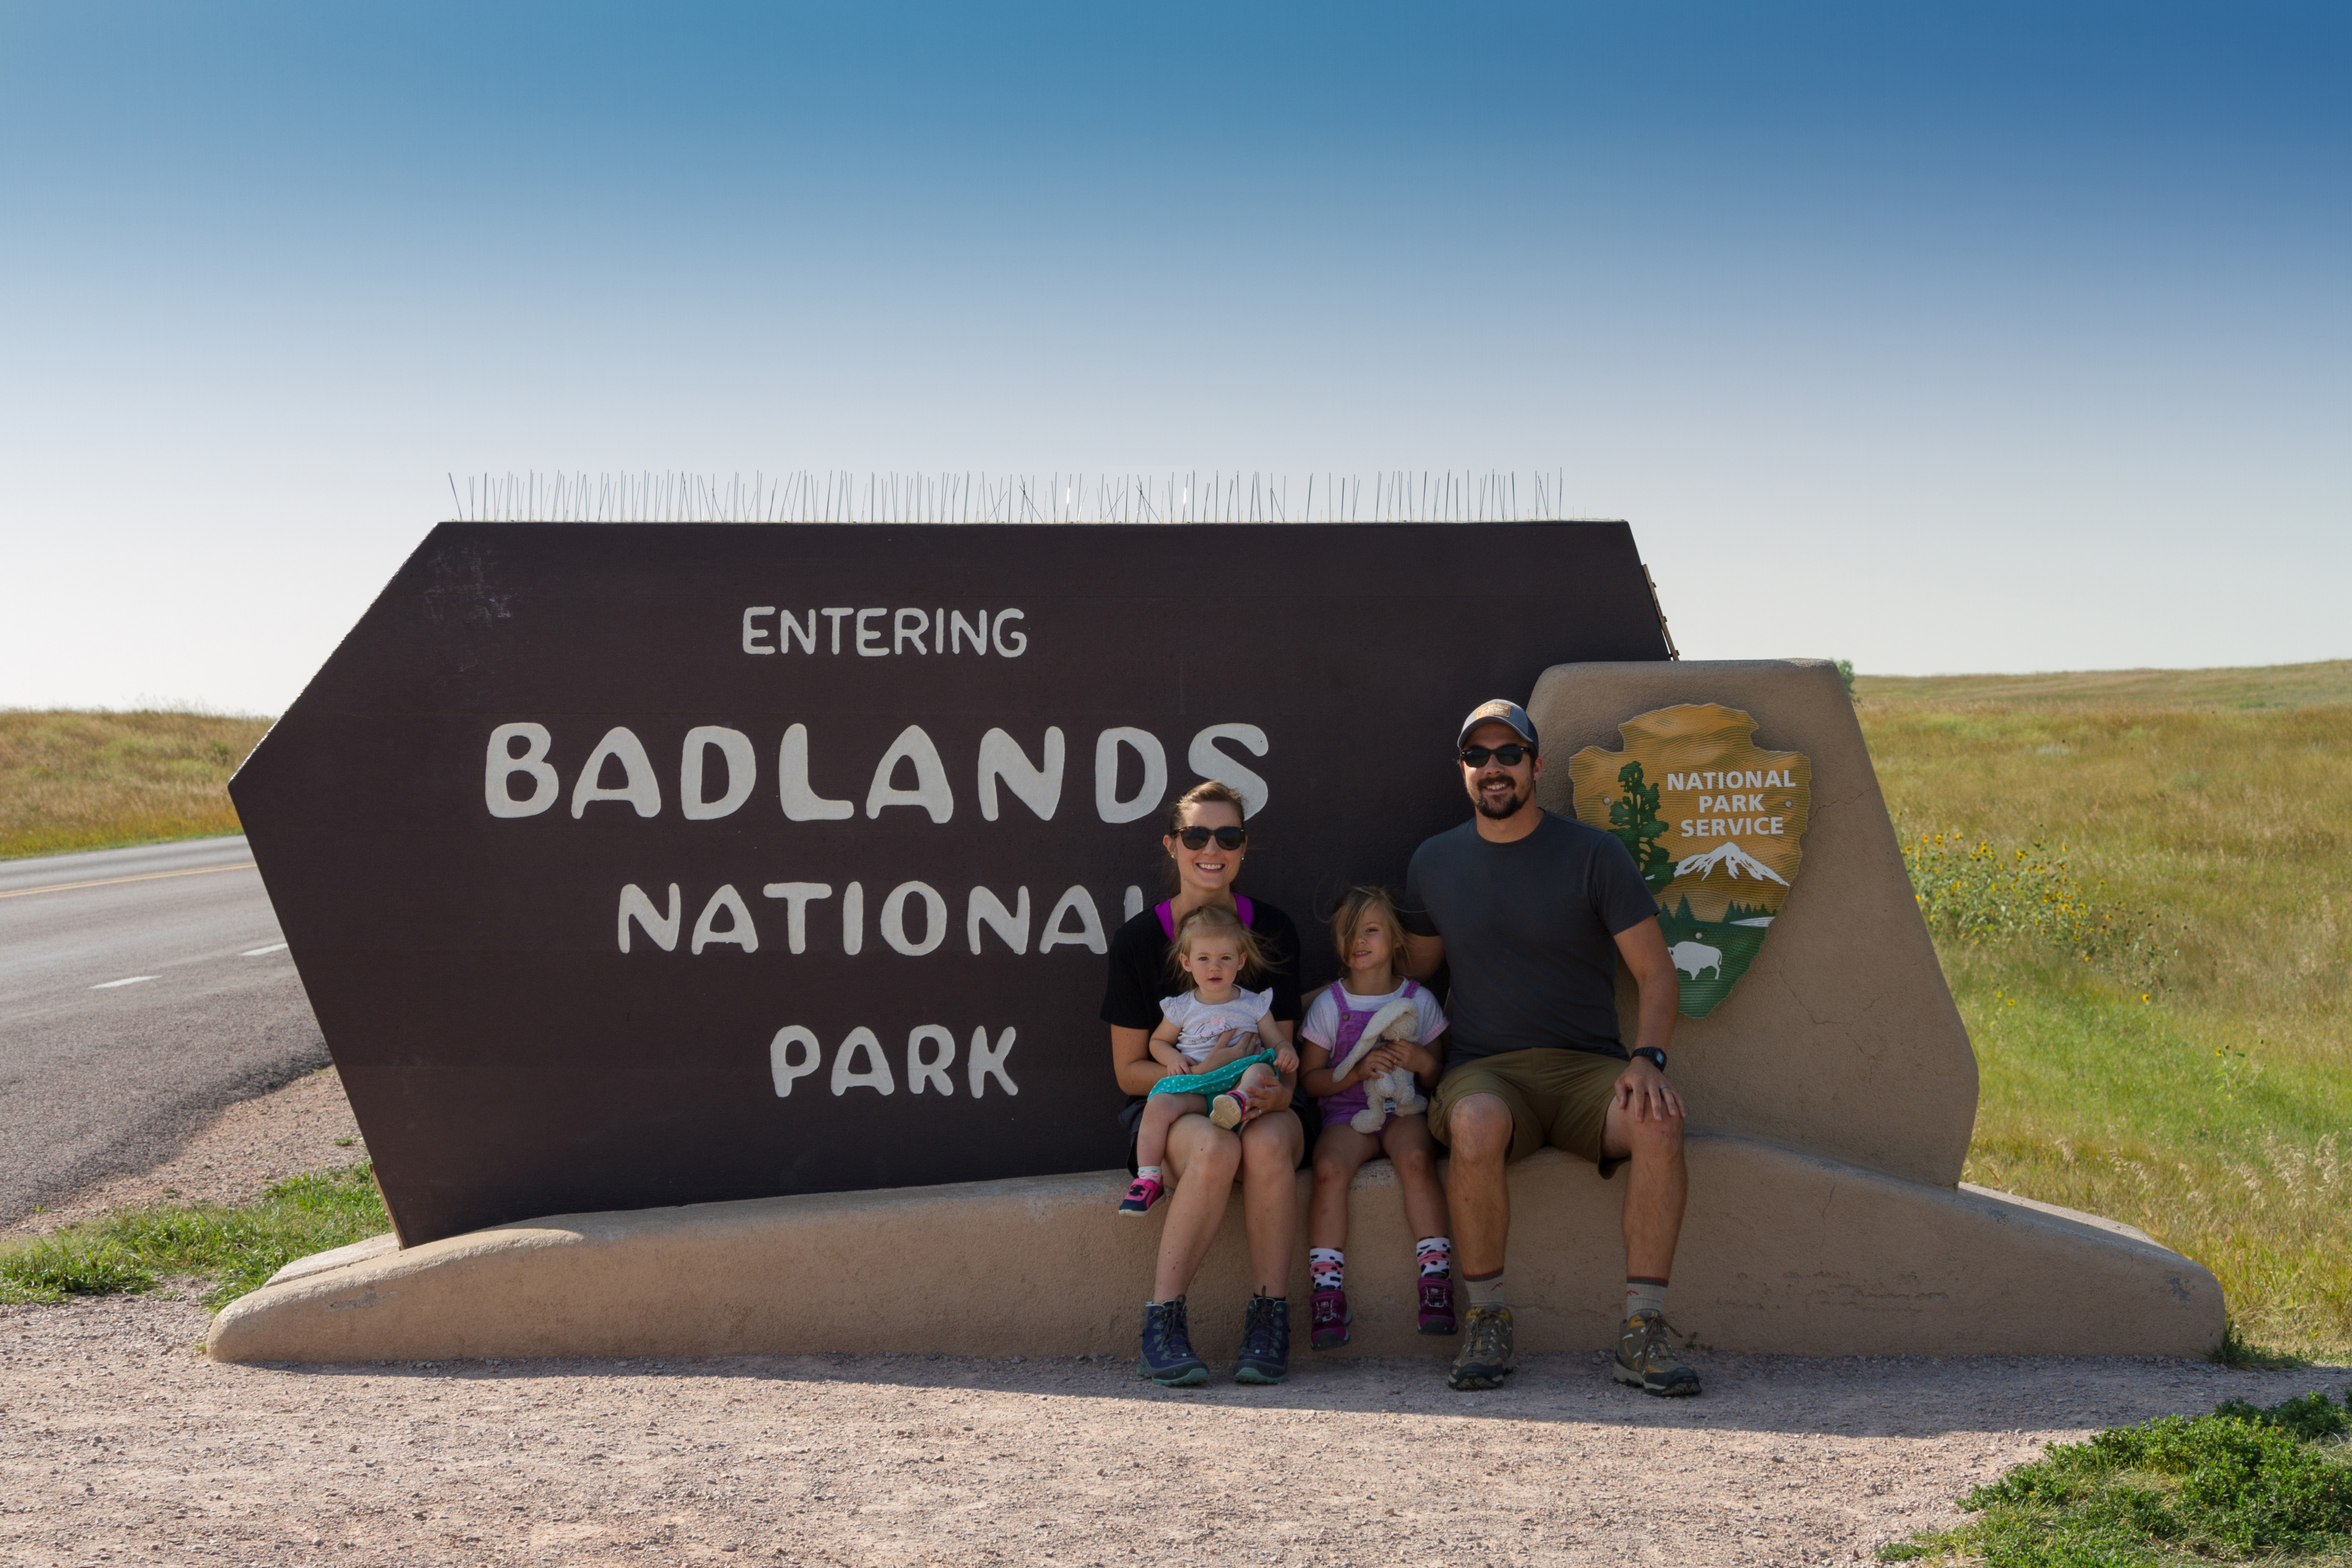 out of boundaries badlands national park sign